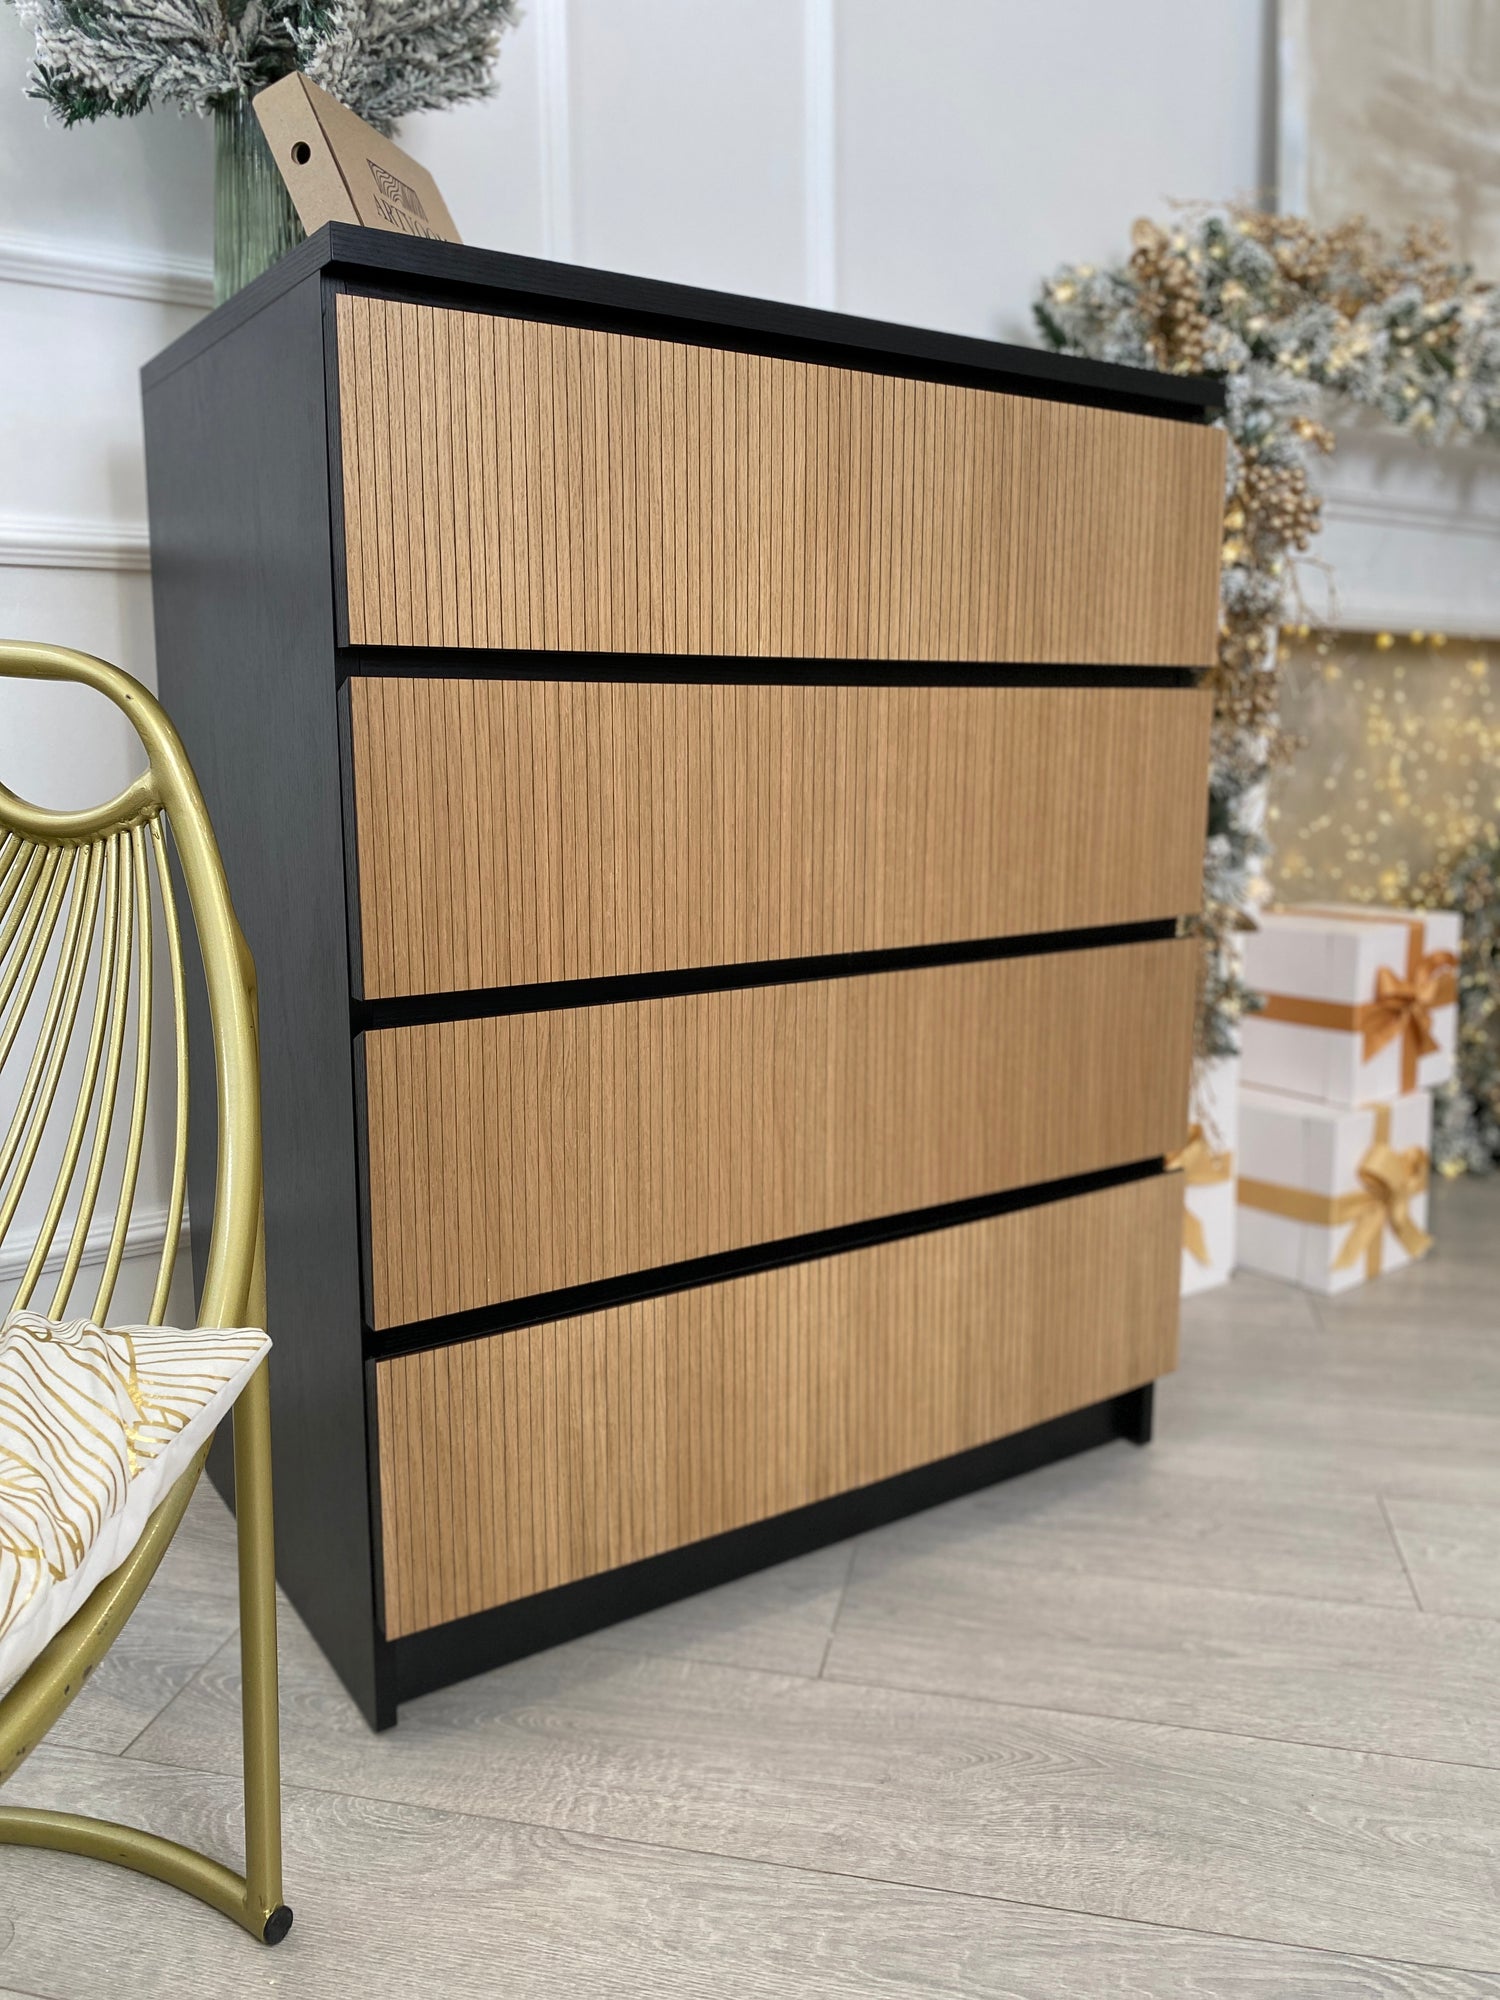 Artvoom overlay wooden slats without a gap for decorating furniture dressers for IKEA® malm - Artvoom